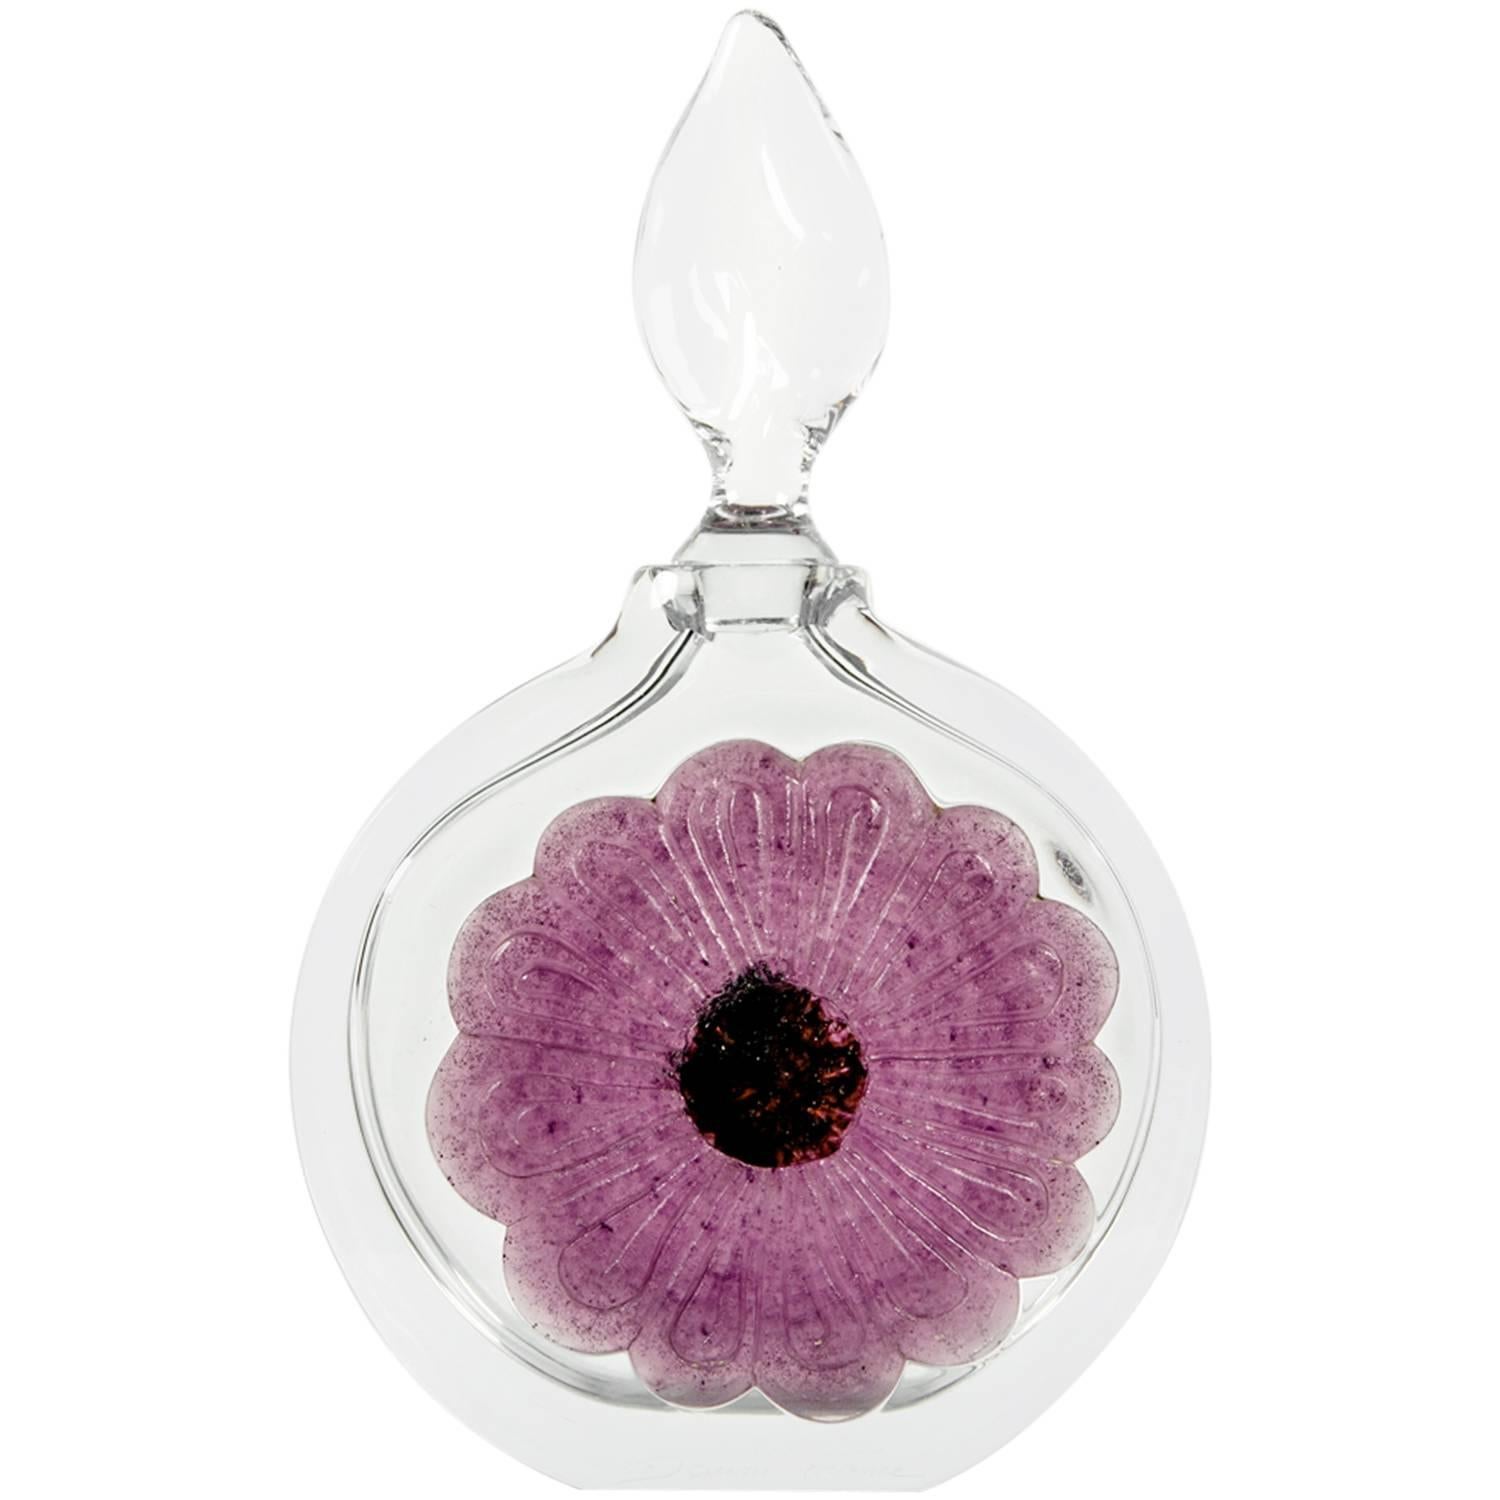 Vintage Daum France Crystal Perfume Bottle